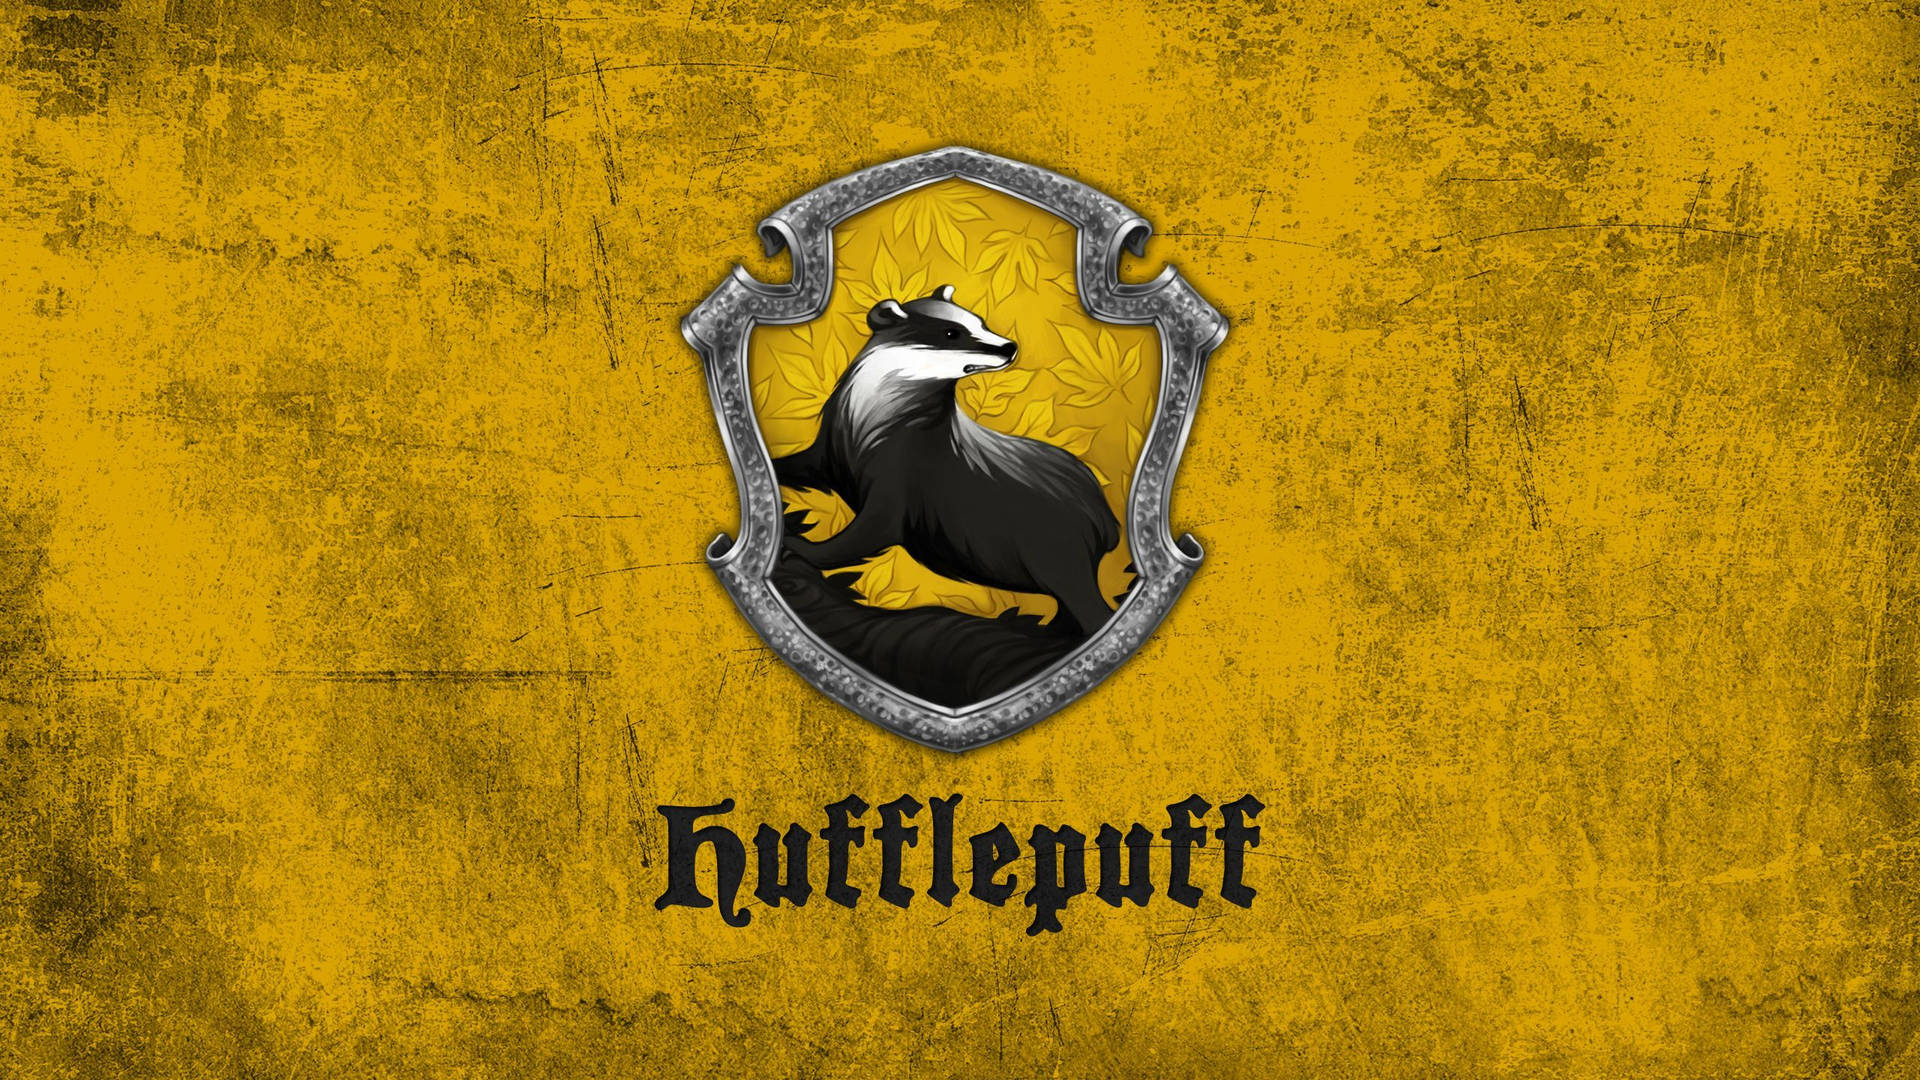 Free Hufflepuff Wallpaper Downloads, Hufflepuff Wallpaper for FREE